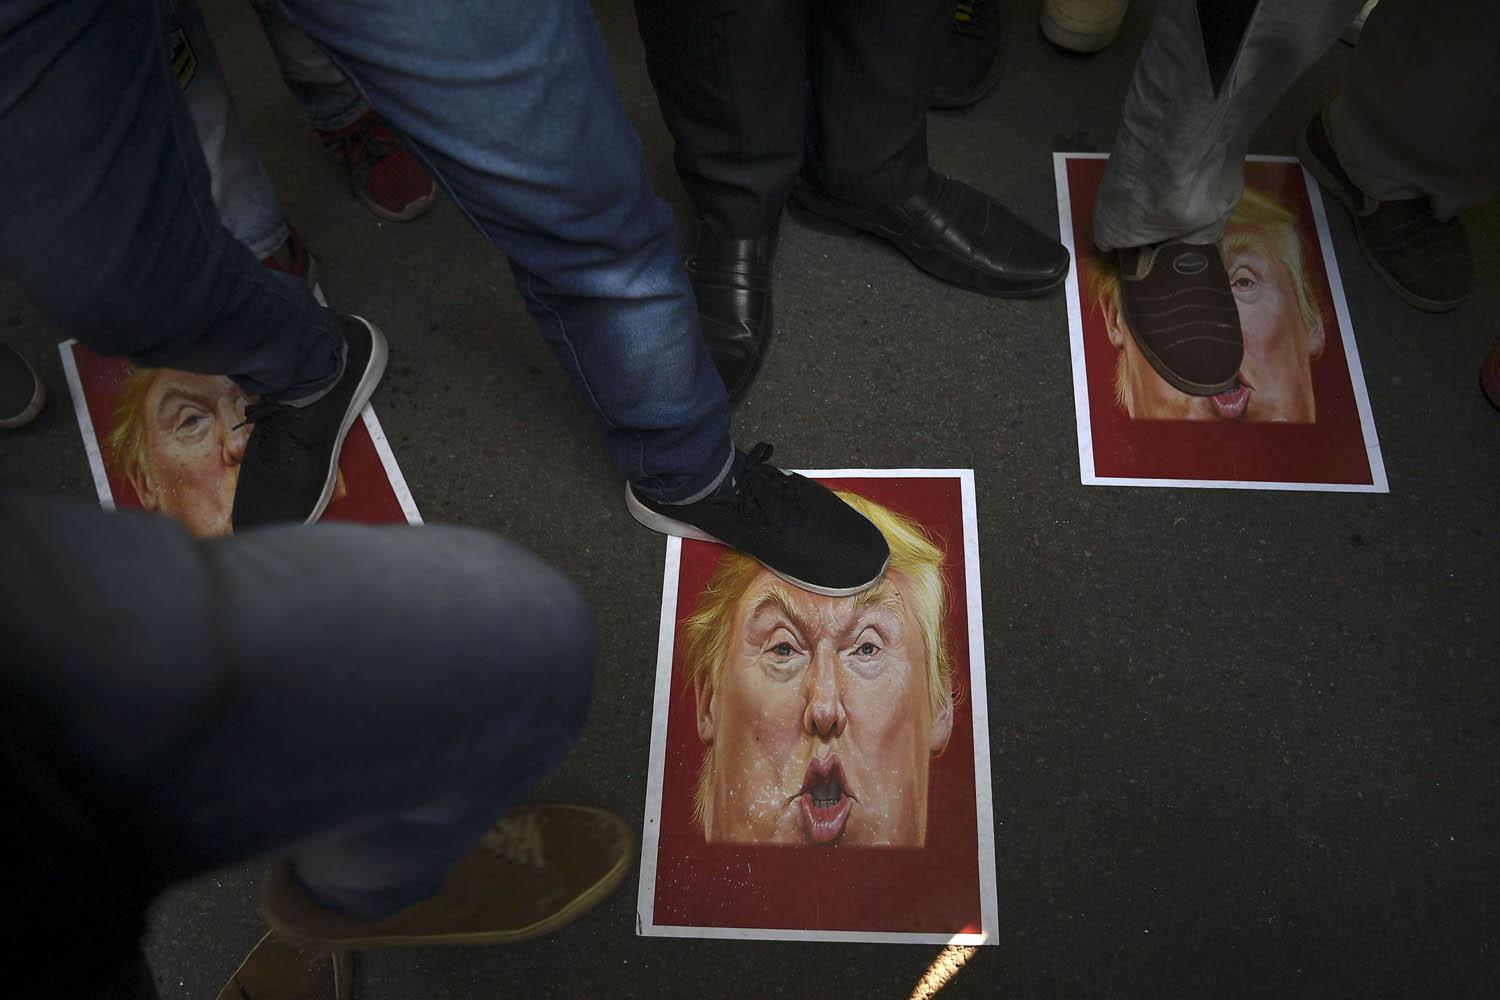 متظاهرون إيرانيون يدوسون صورا للرئيس الأميركي دونالد ترامب